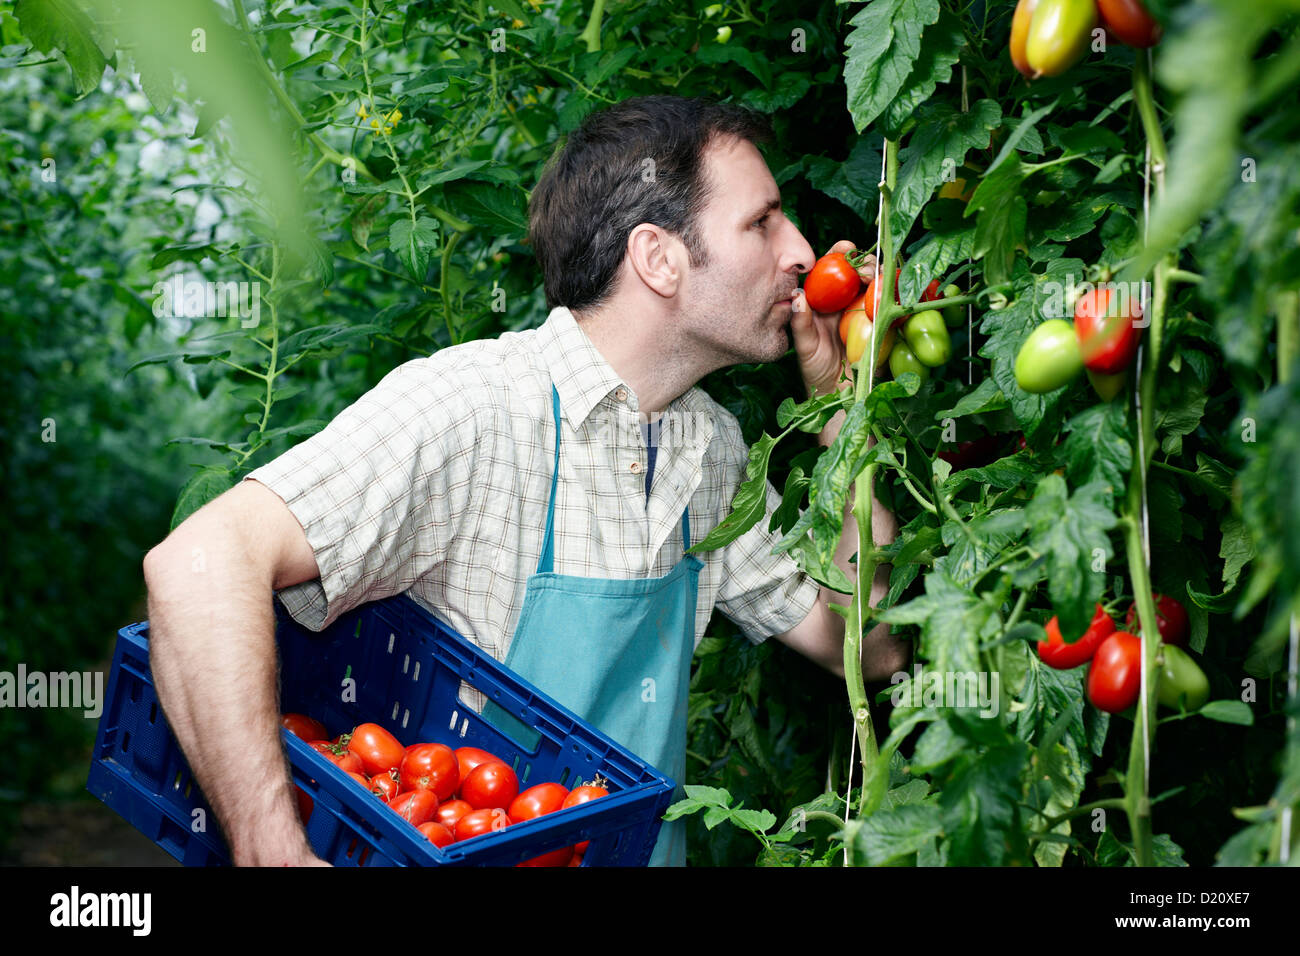 Germany, Bavaria, Munich, Mature man harvesting tomatoes in greenhouse Stock Photo